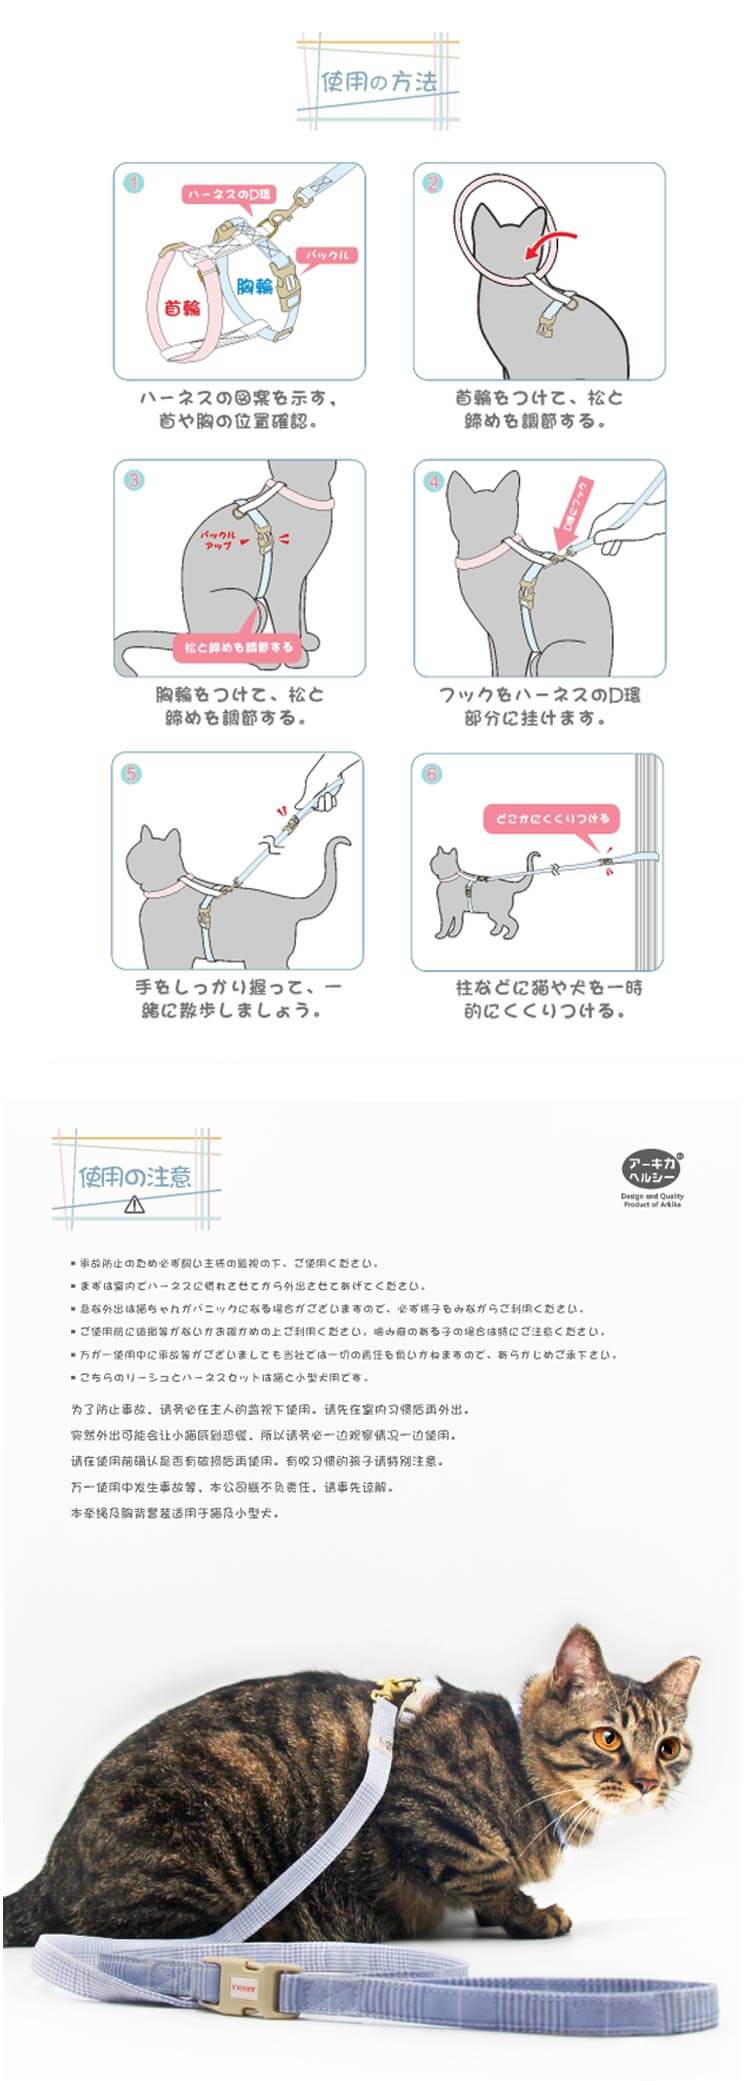 Arkika-Cat-Harness-and-Leash-travel-cat-harness-luxury-cat-harness-soft cat-harness-plaid-japan